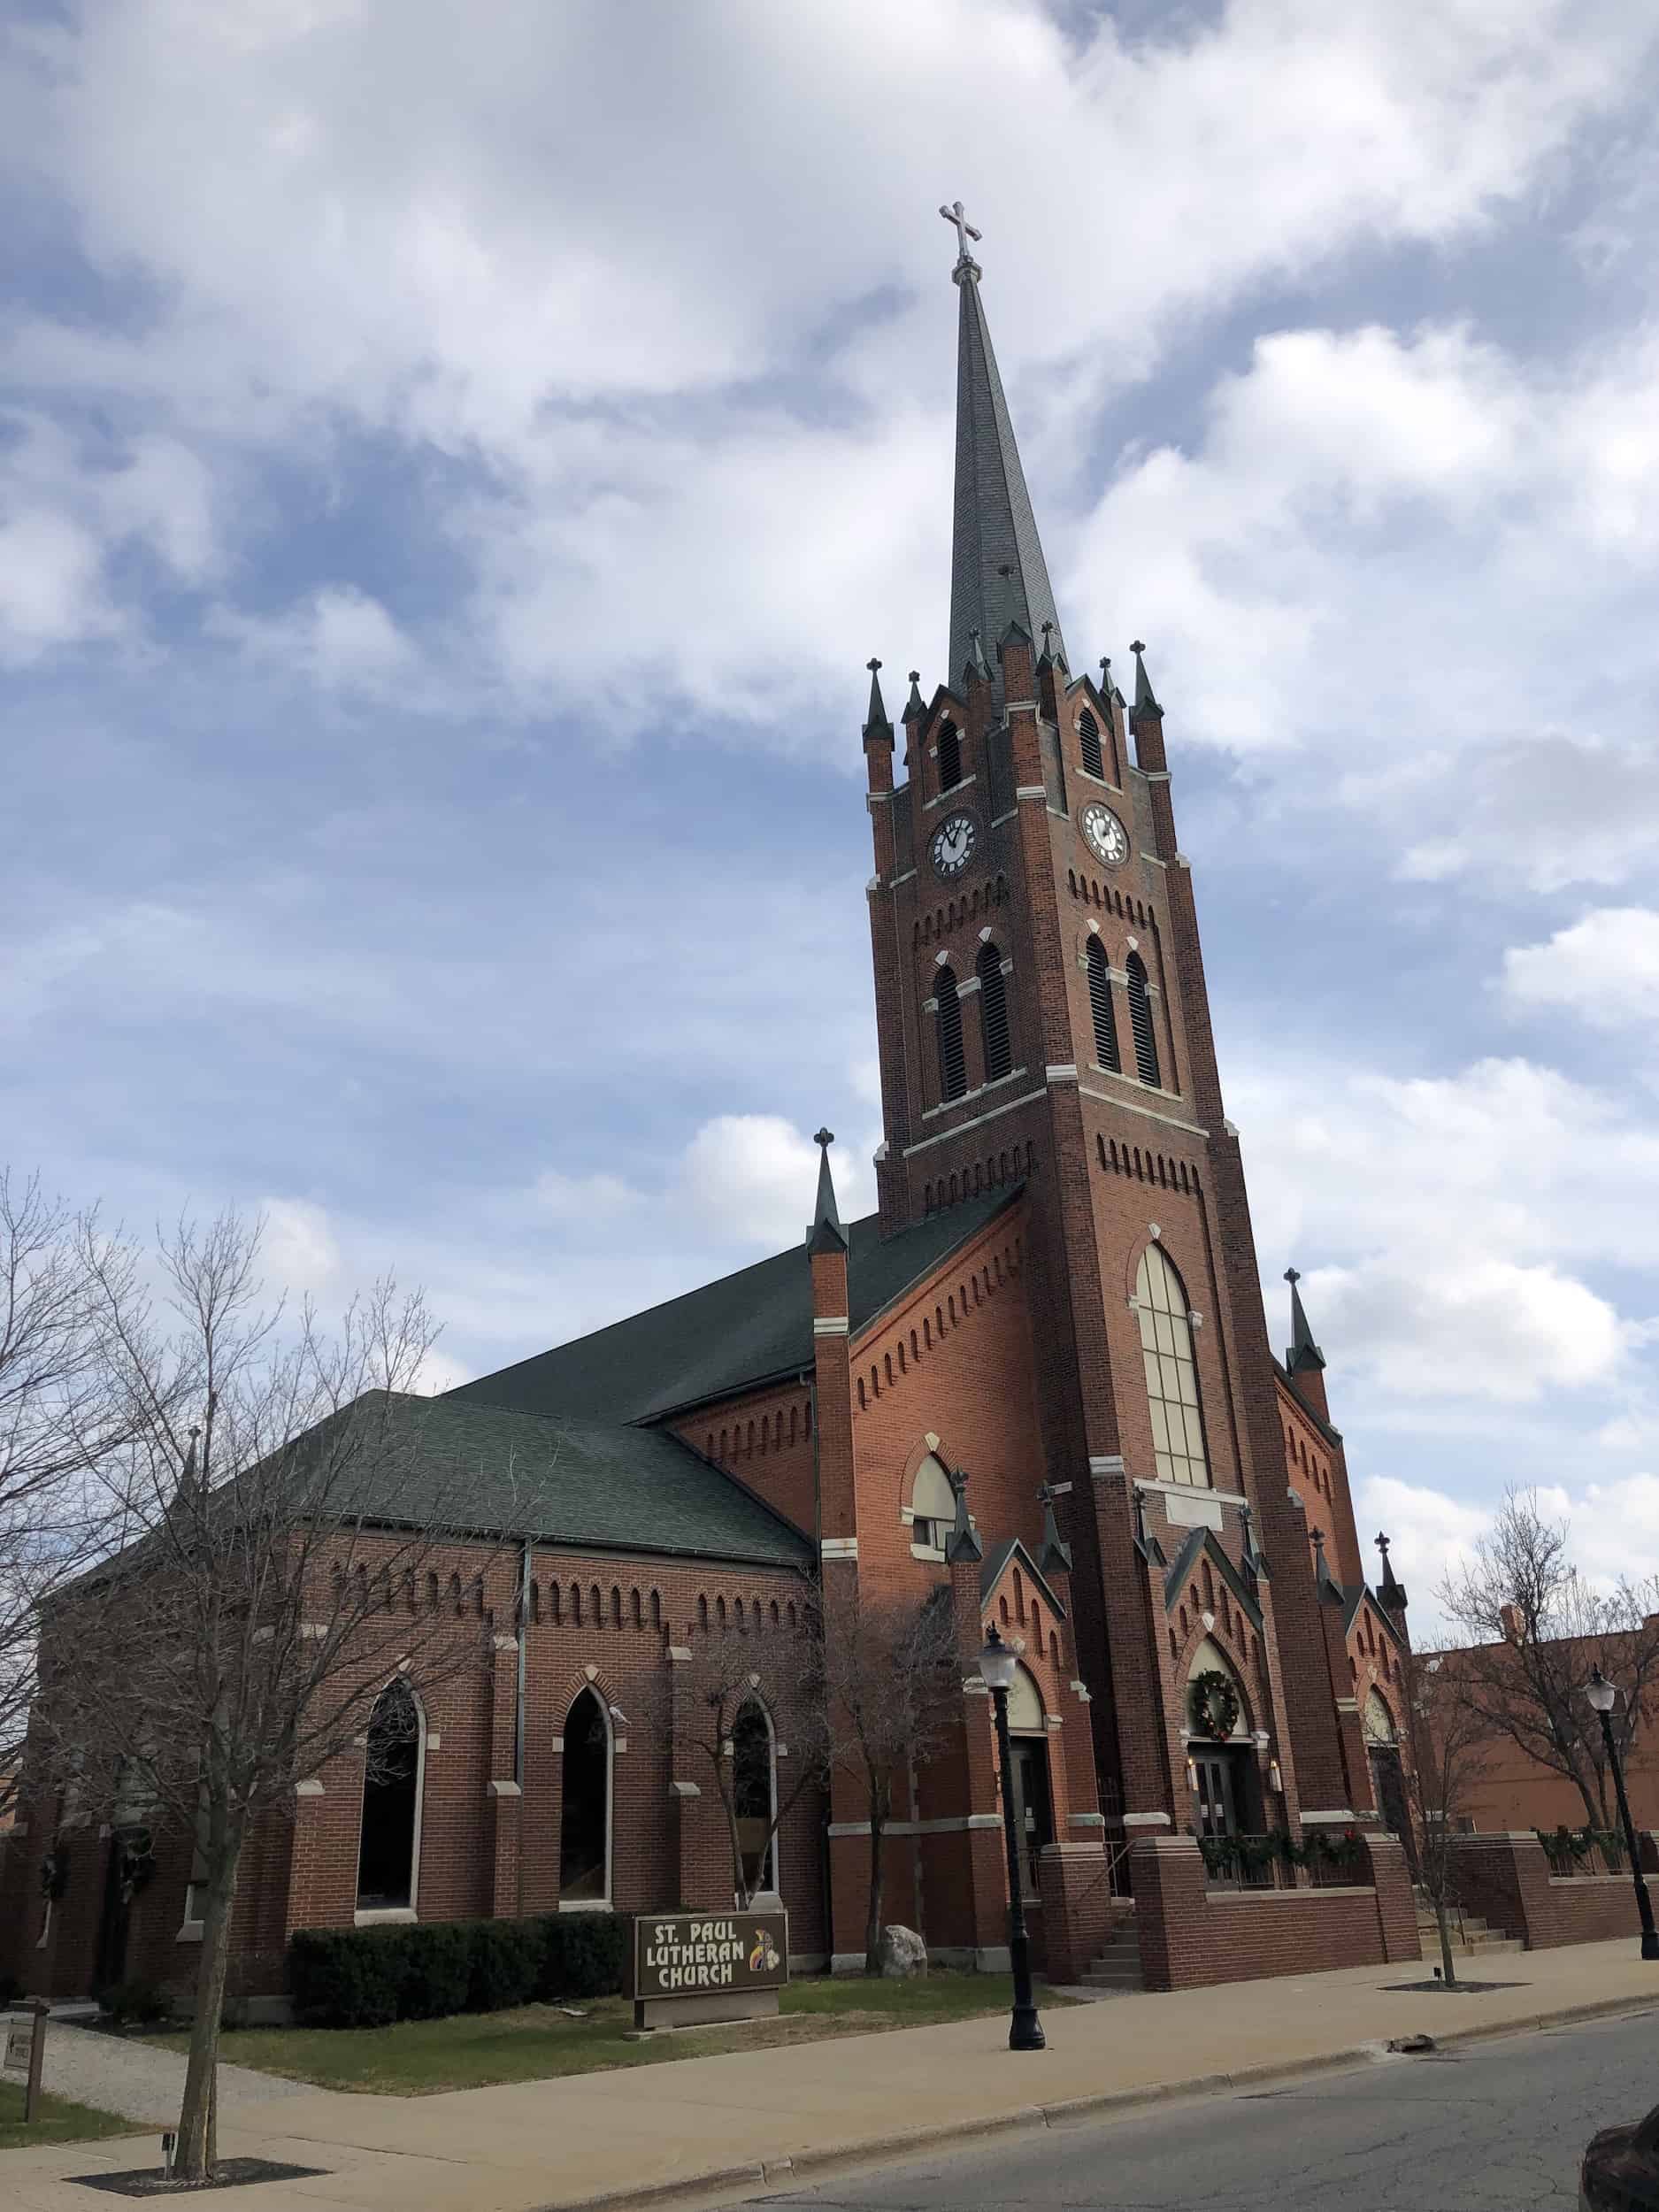 St. Paul Lutheran Church in Michigan City, Indiana